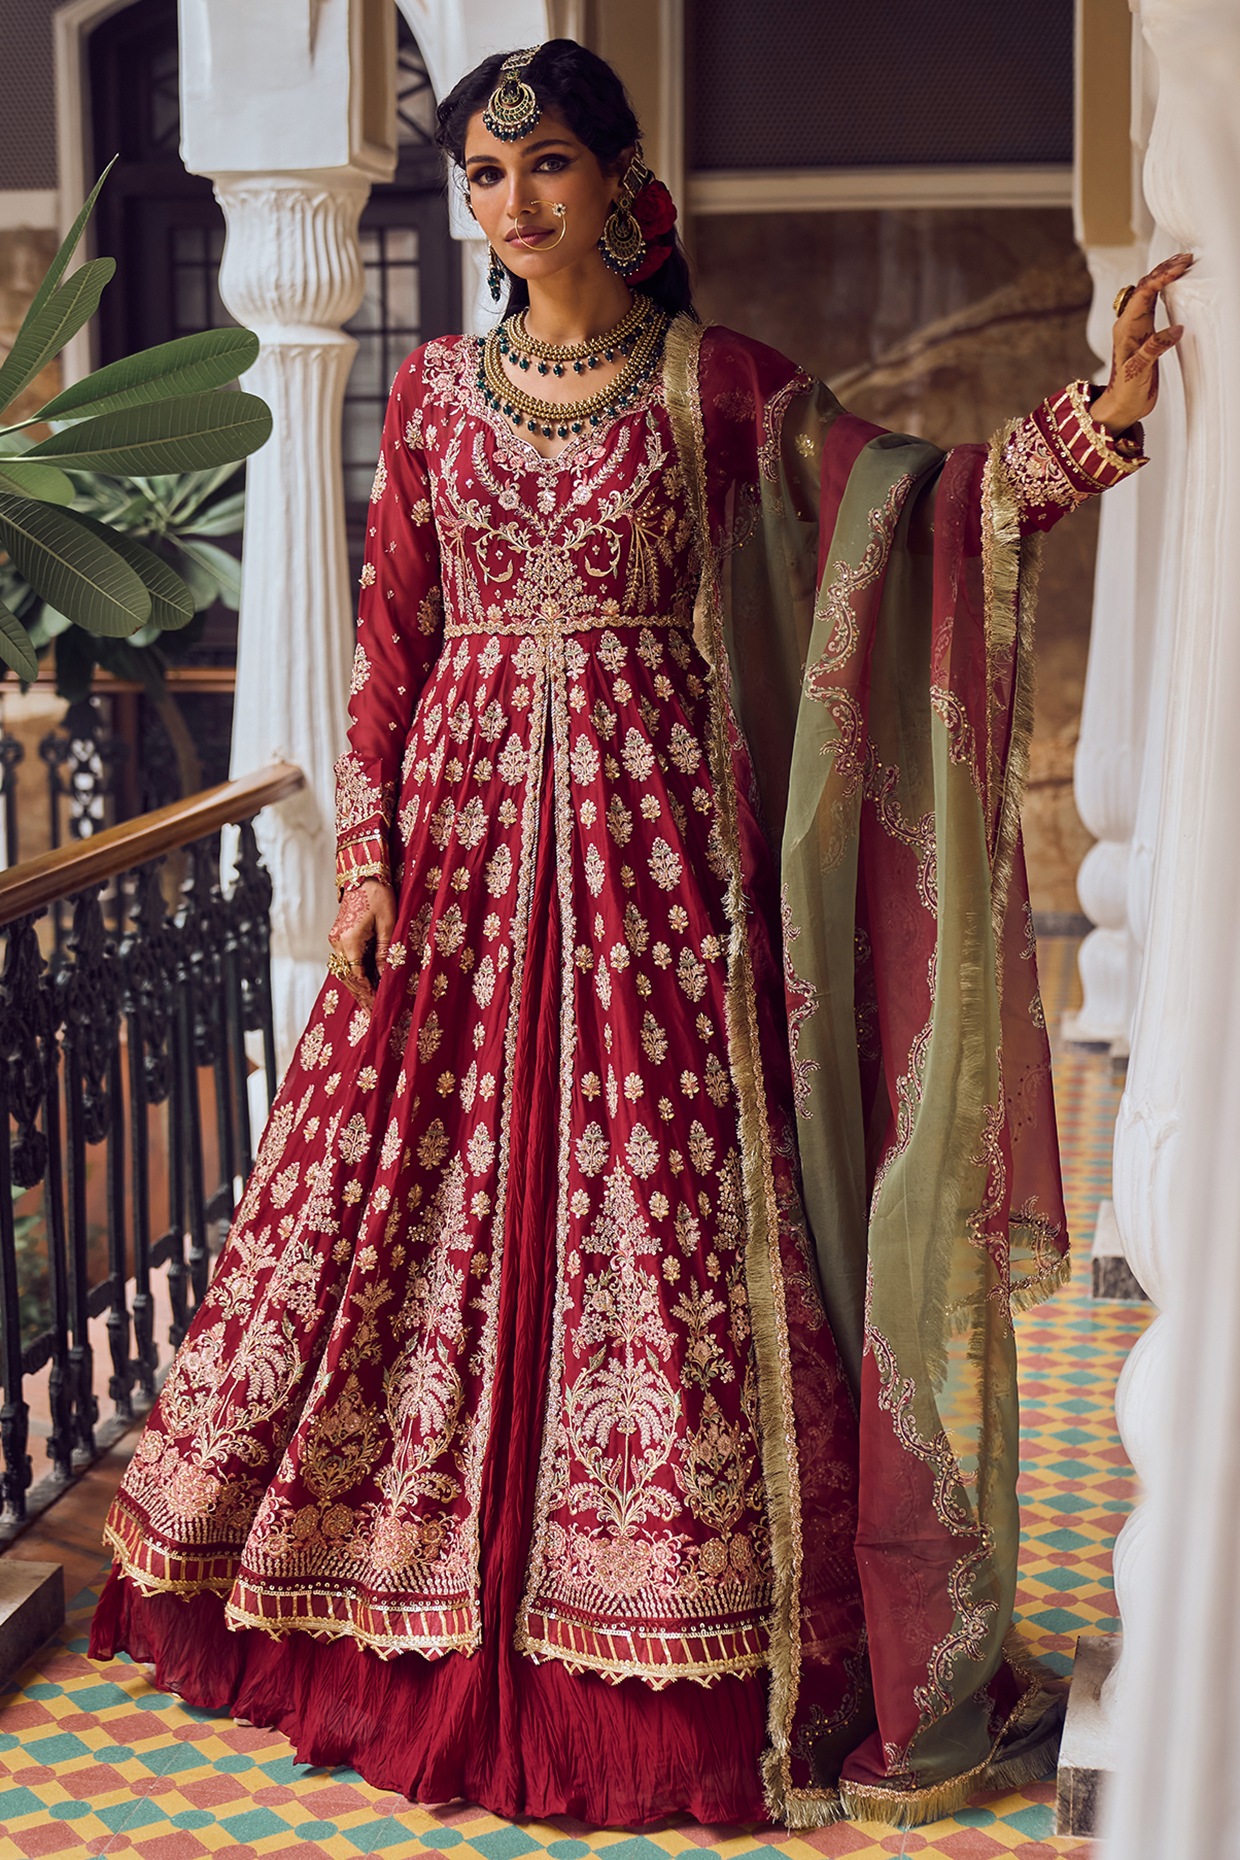 Red Traditional Wedding Handmade split Anarkali lehenga Indian Pakistani  Dress | eBay